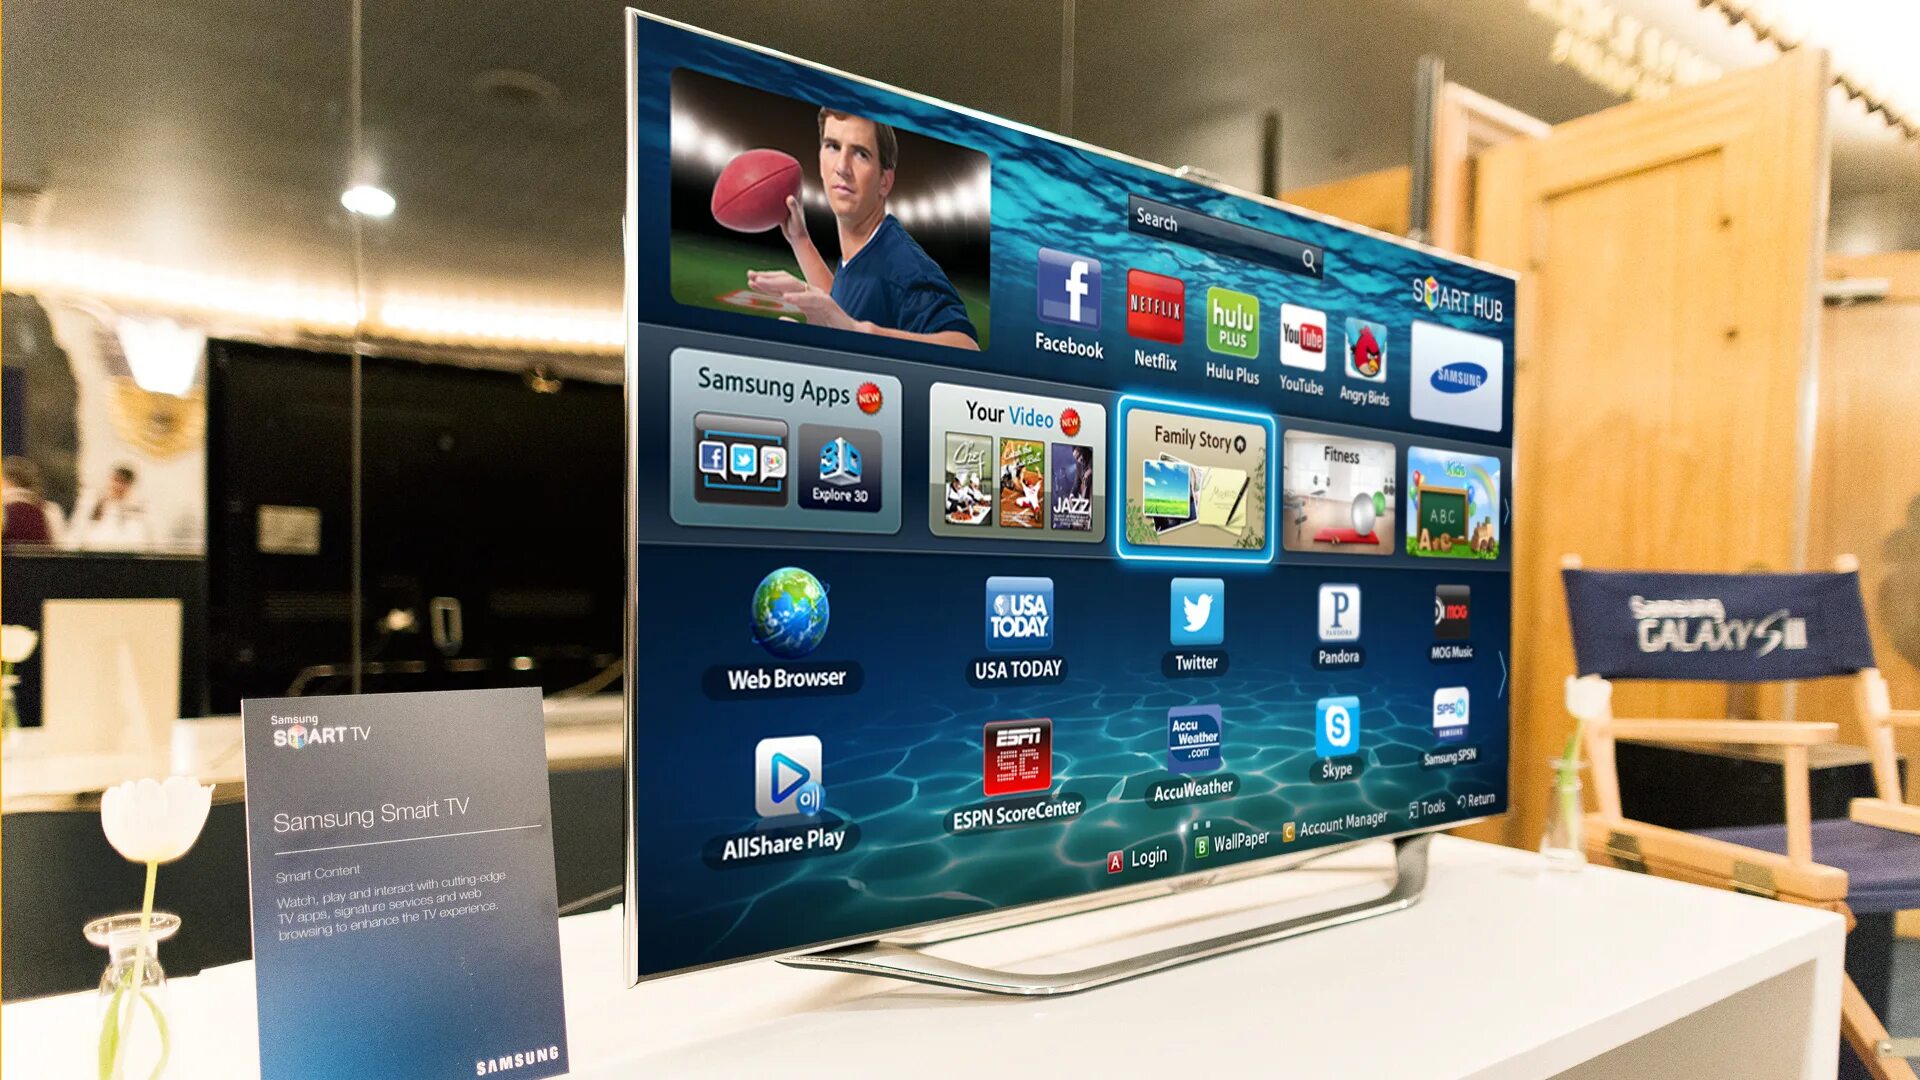 Смат тв. Samsung телевизор Smart TV 2013. Телевизор самсунг смарт ТВ. Samsung 2013 телевизоры смарт. Samsung Smart TV с650.